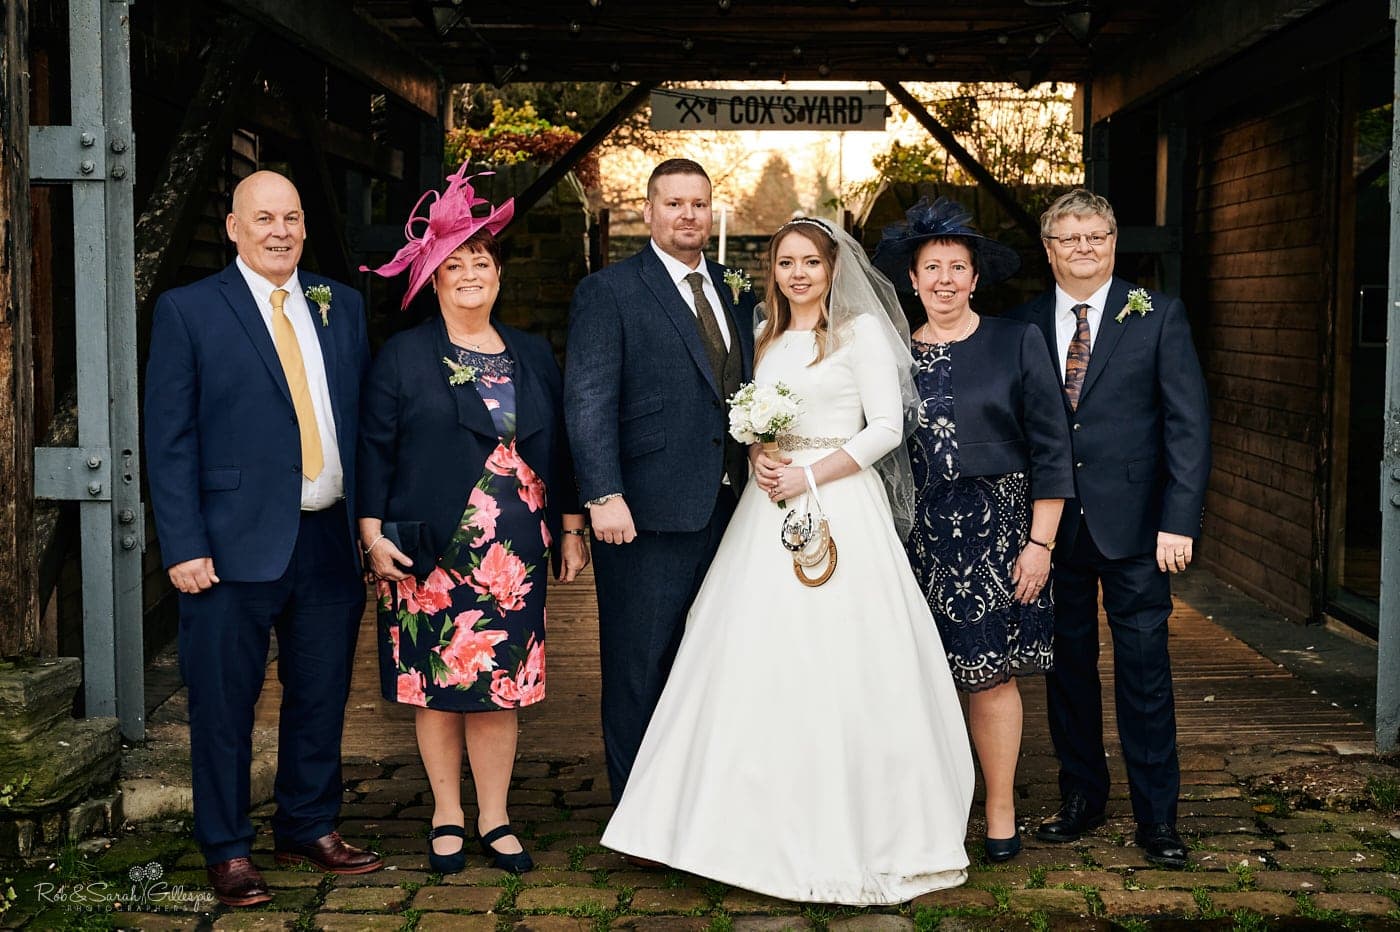 Wedding group photo at Cox's Yard in Stratford-upon-Avon